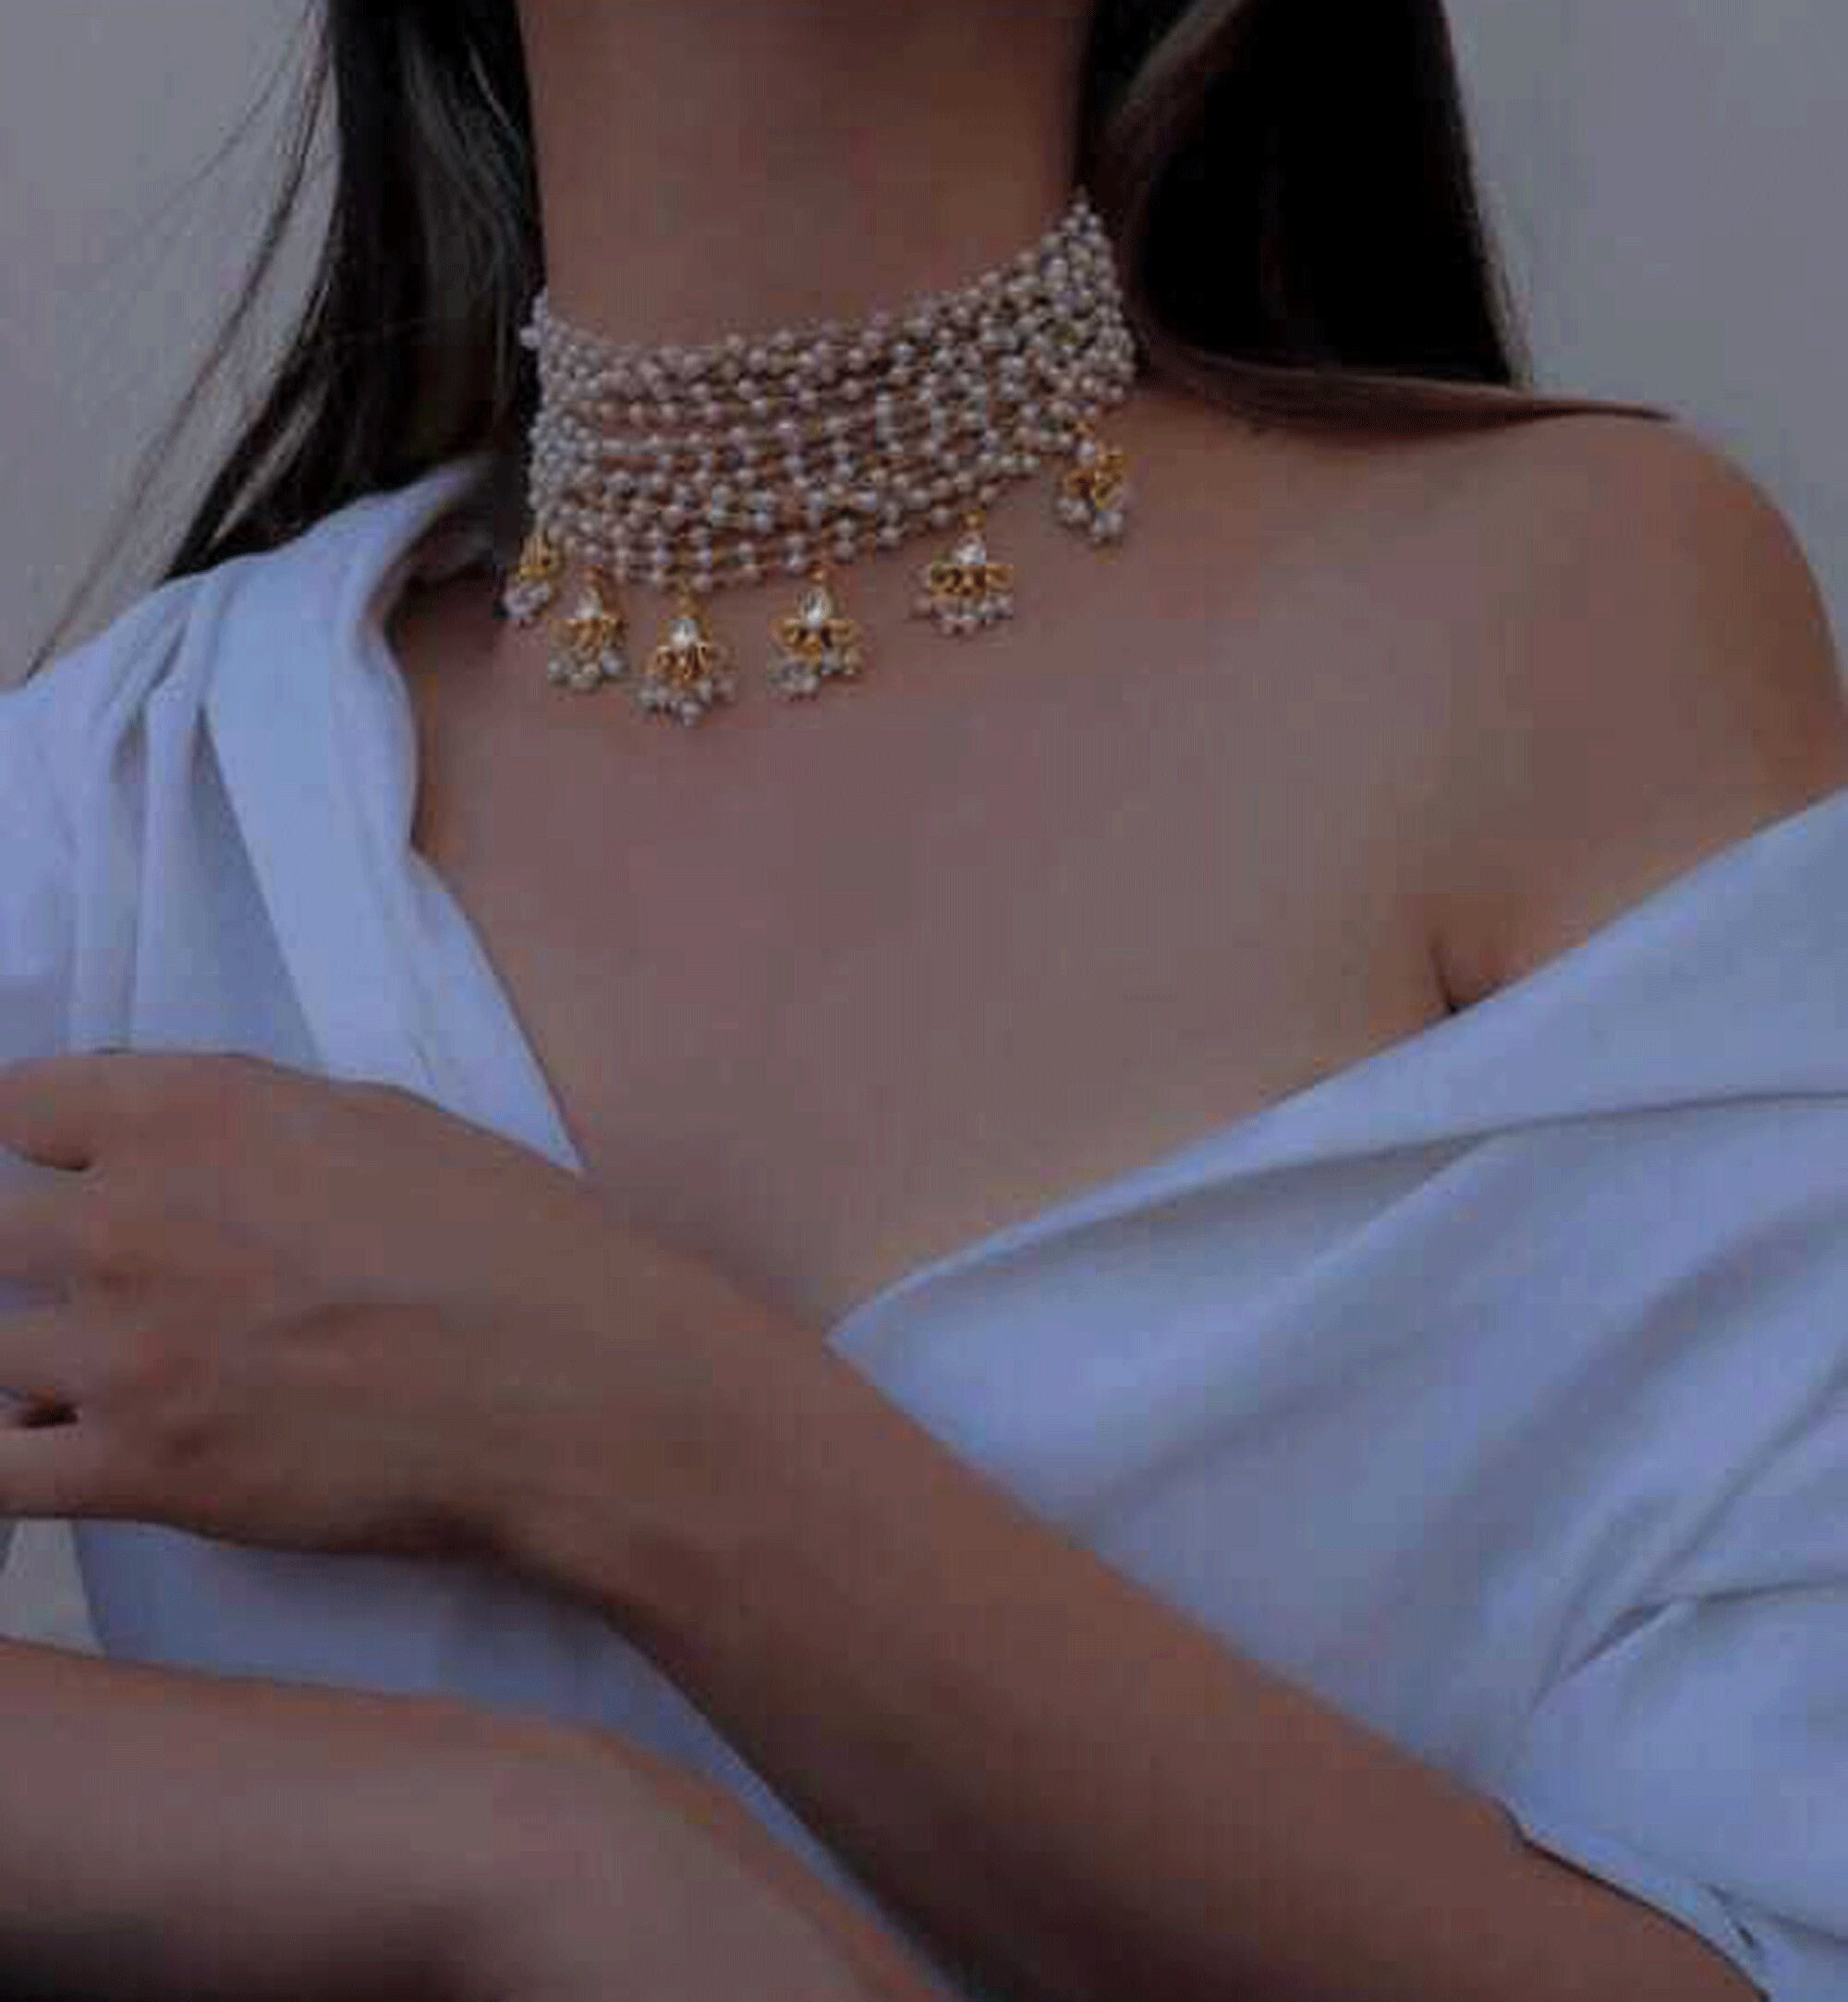 Matte Finish Temple Jewellery Choker Necklace Set for Women / Girl –